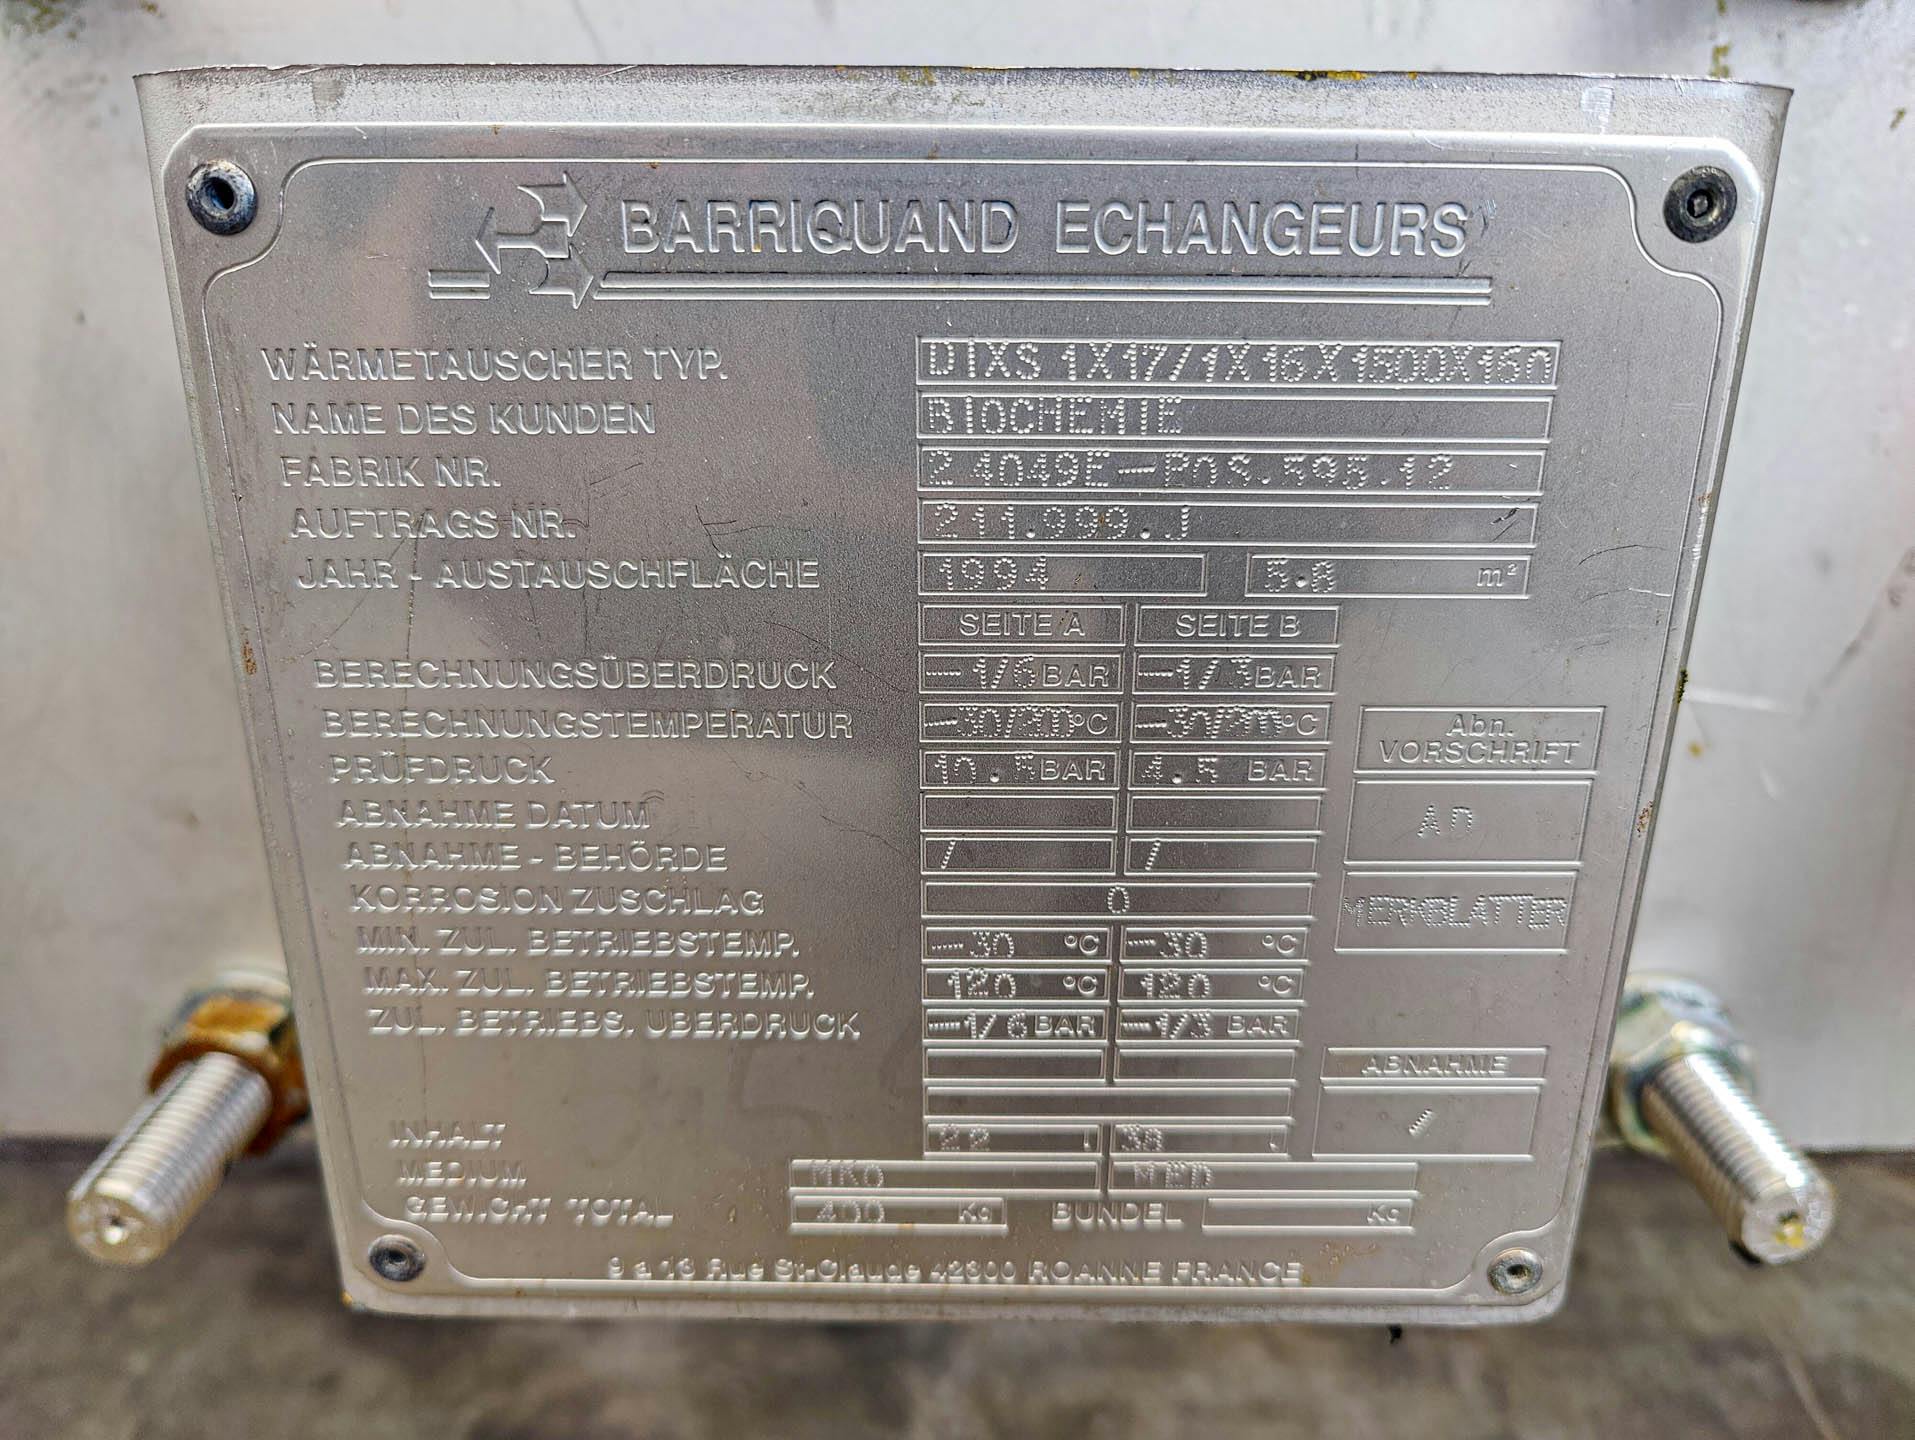 Barriquand Platular DIXS 1x17/1x16/1500/160 welded plate heat exchanger - Scambiatore di calore a piastre - image 6